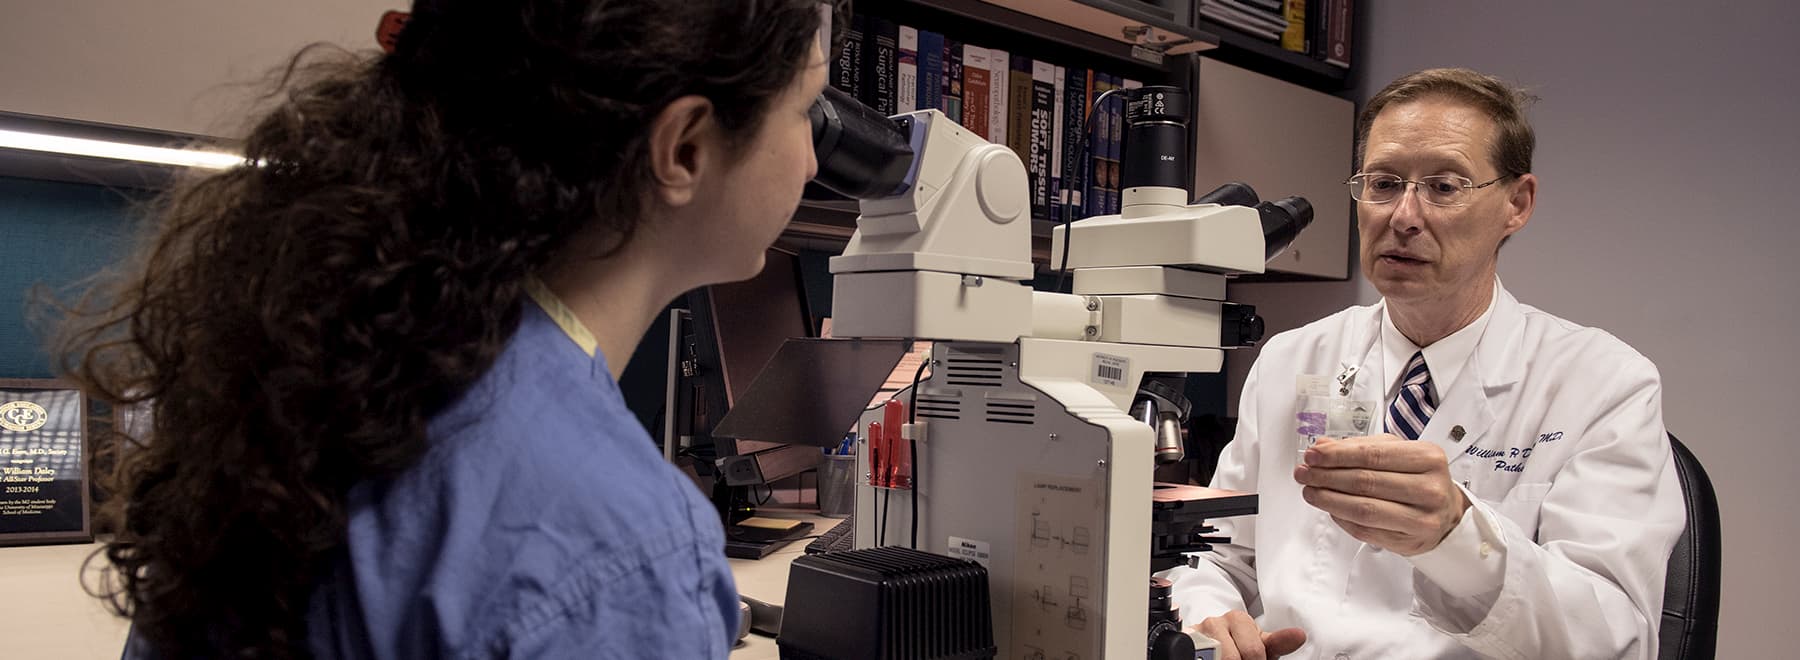 Pathologists examine specimens